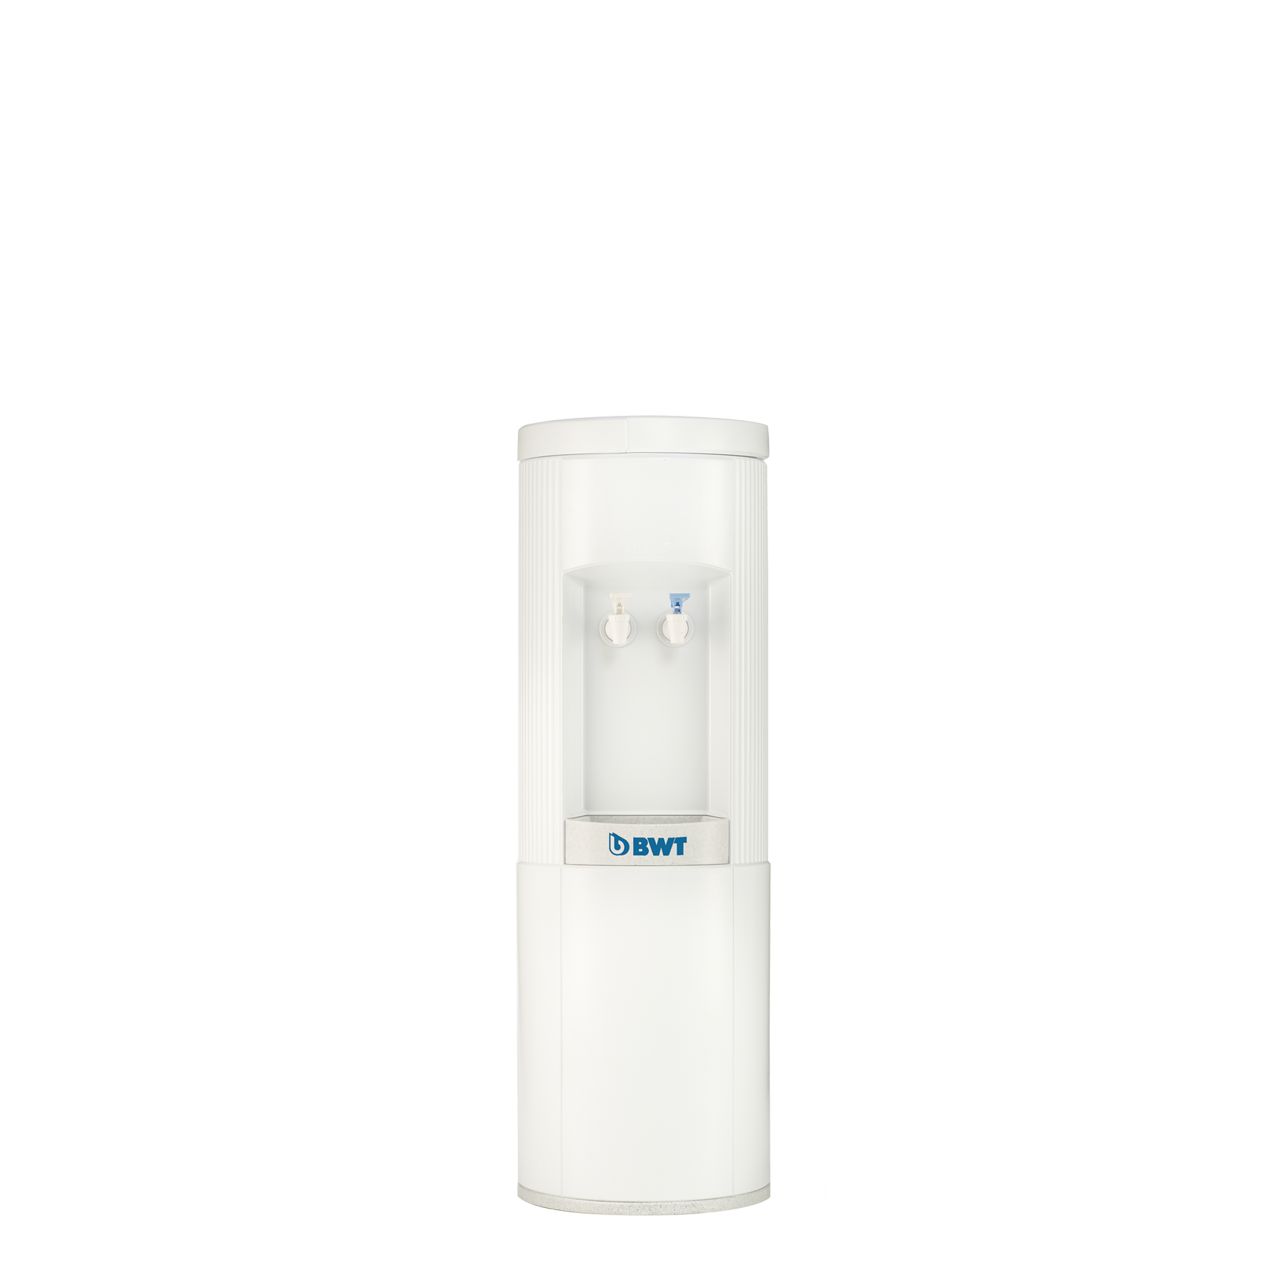 BWT water cooler